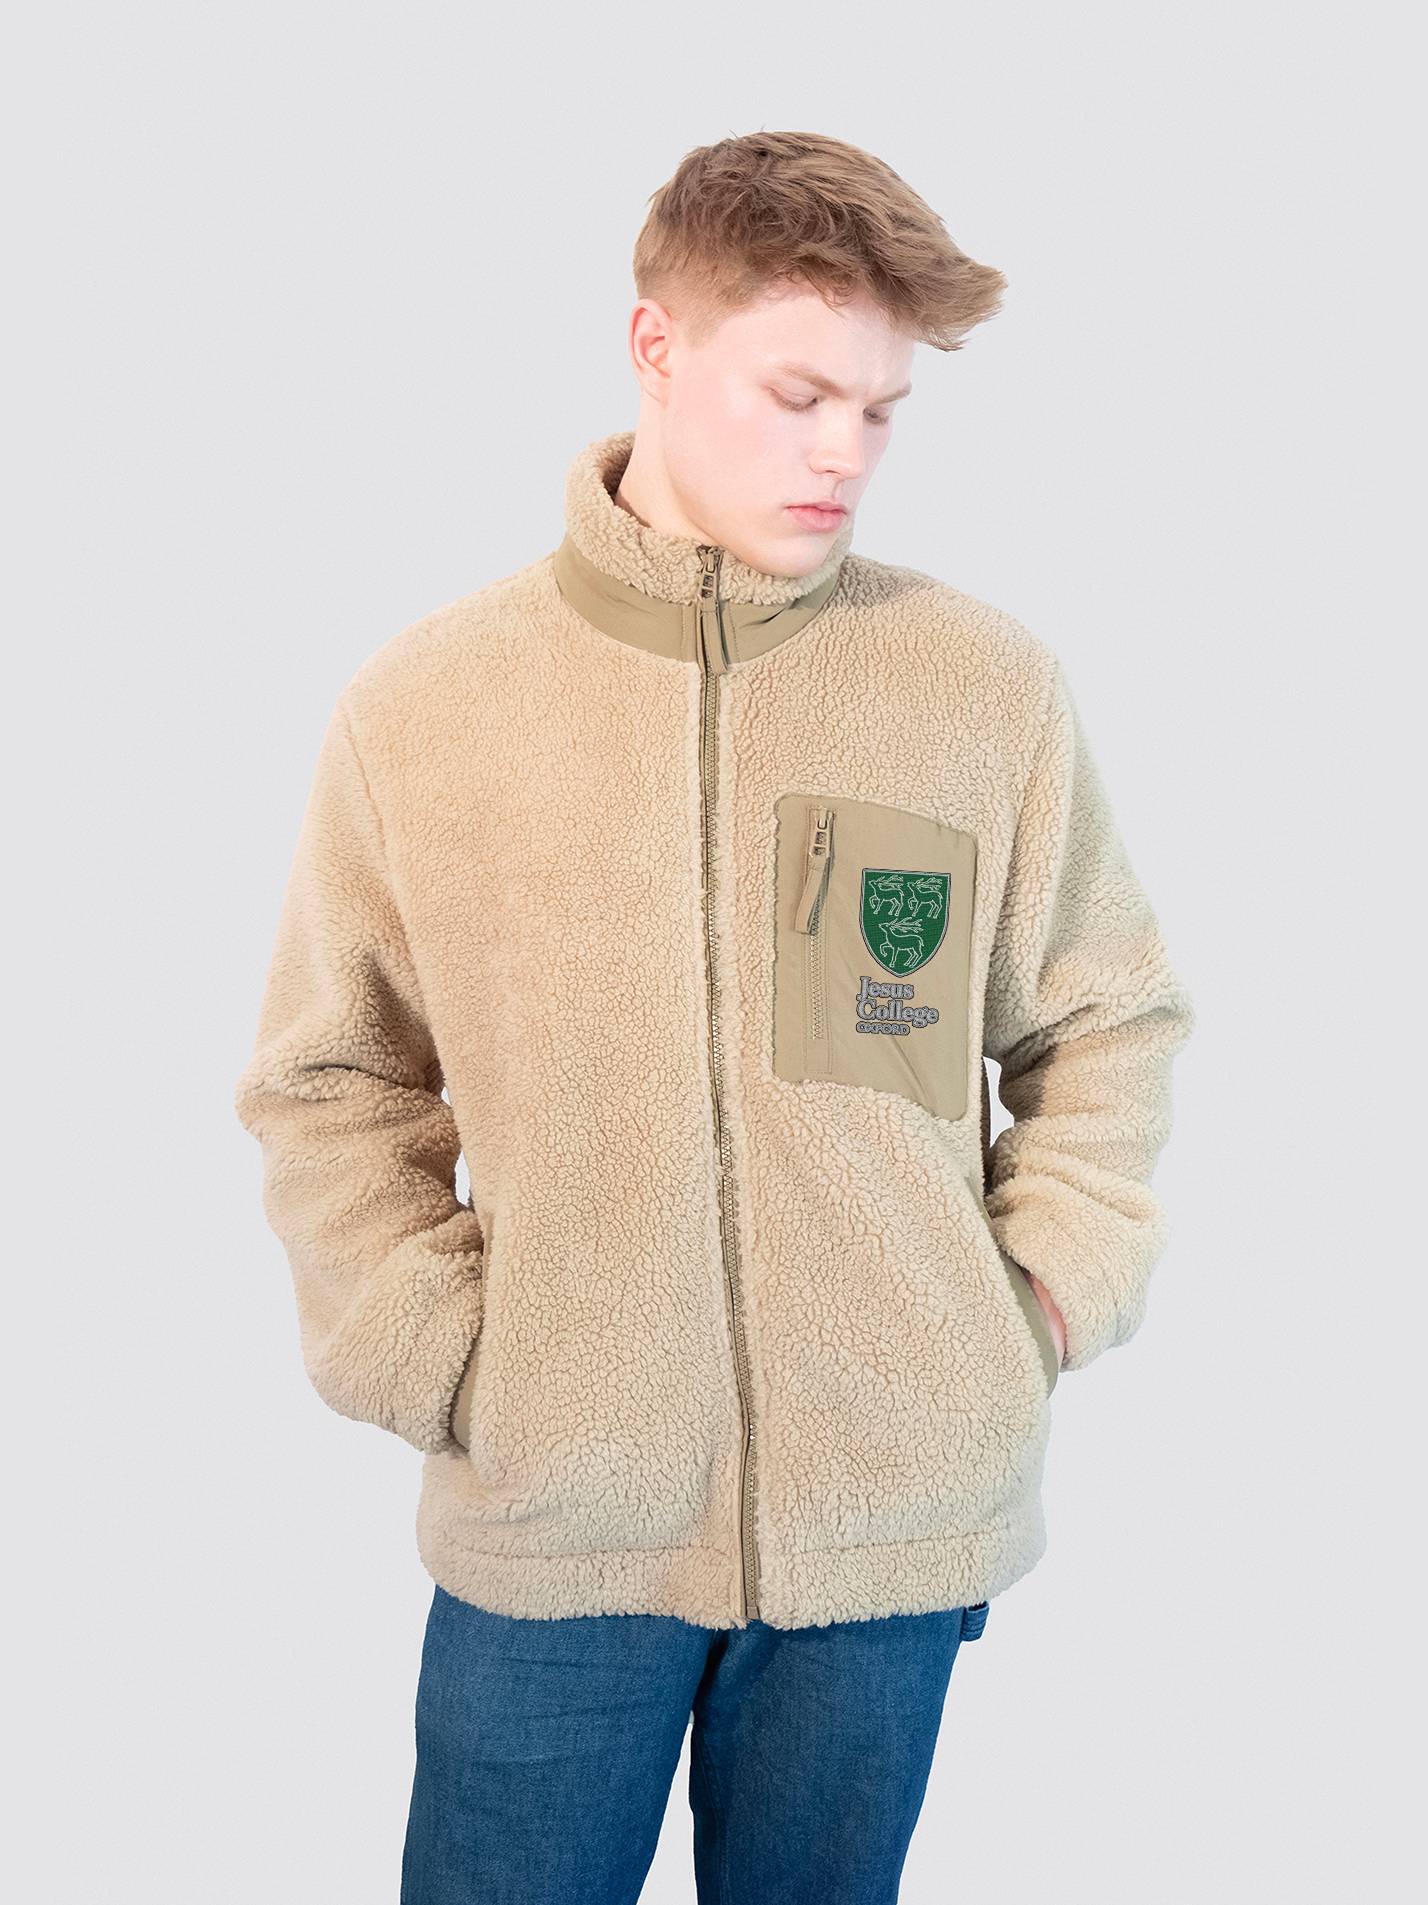 Jesus College Oxford Unisex Deep-Pile Sherpa Fleece Jacket